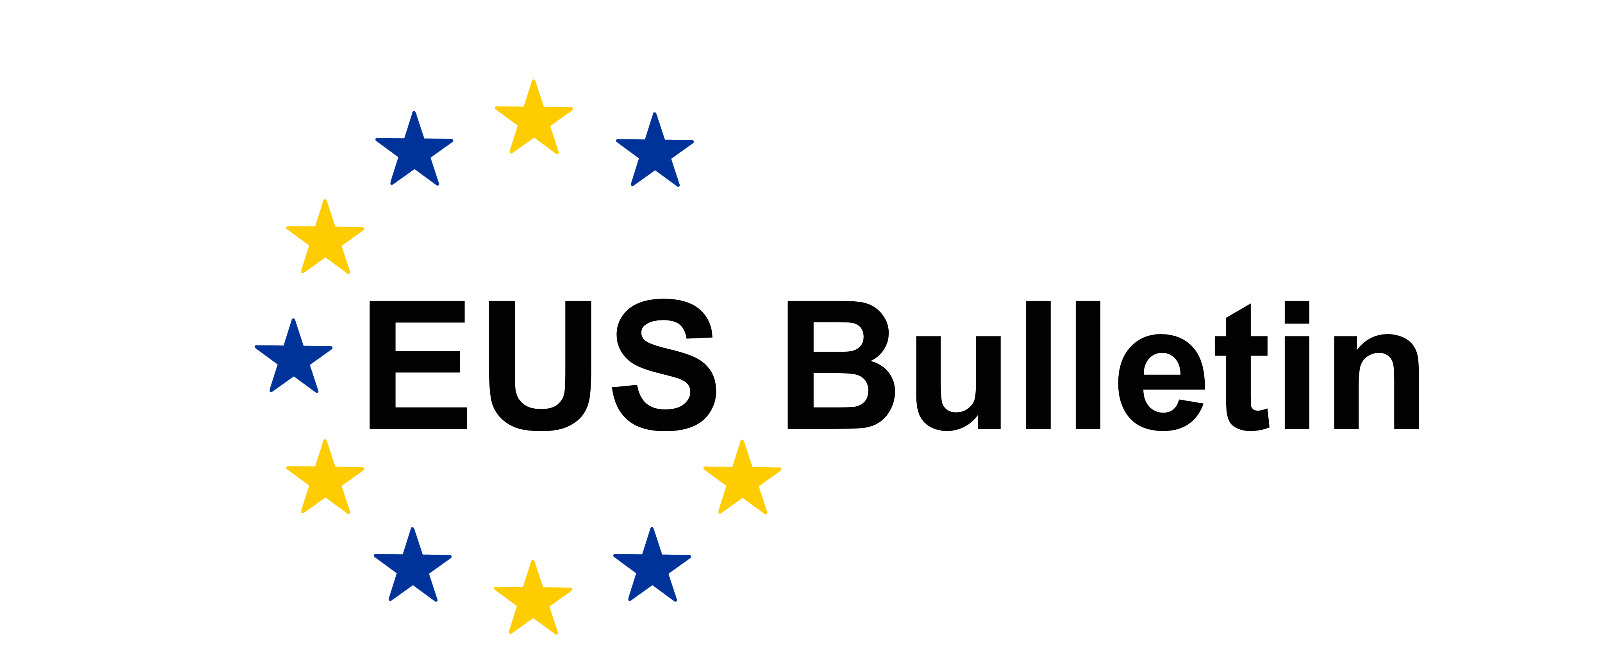 EUS Bulletin